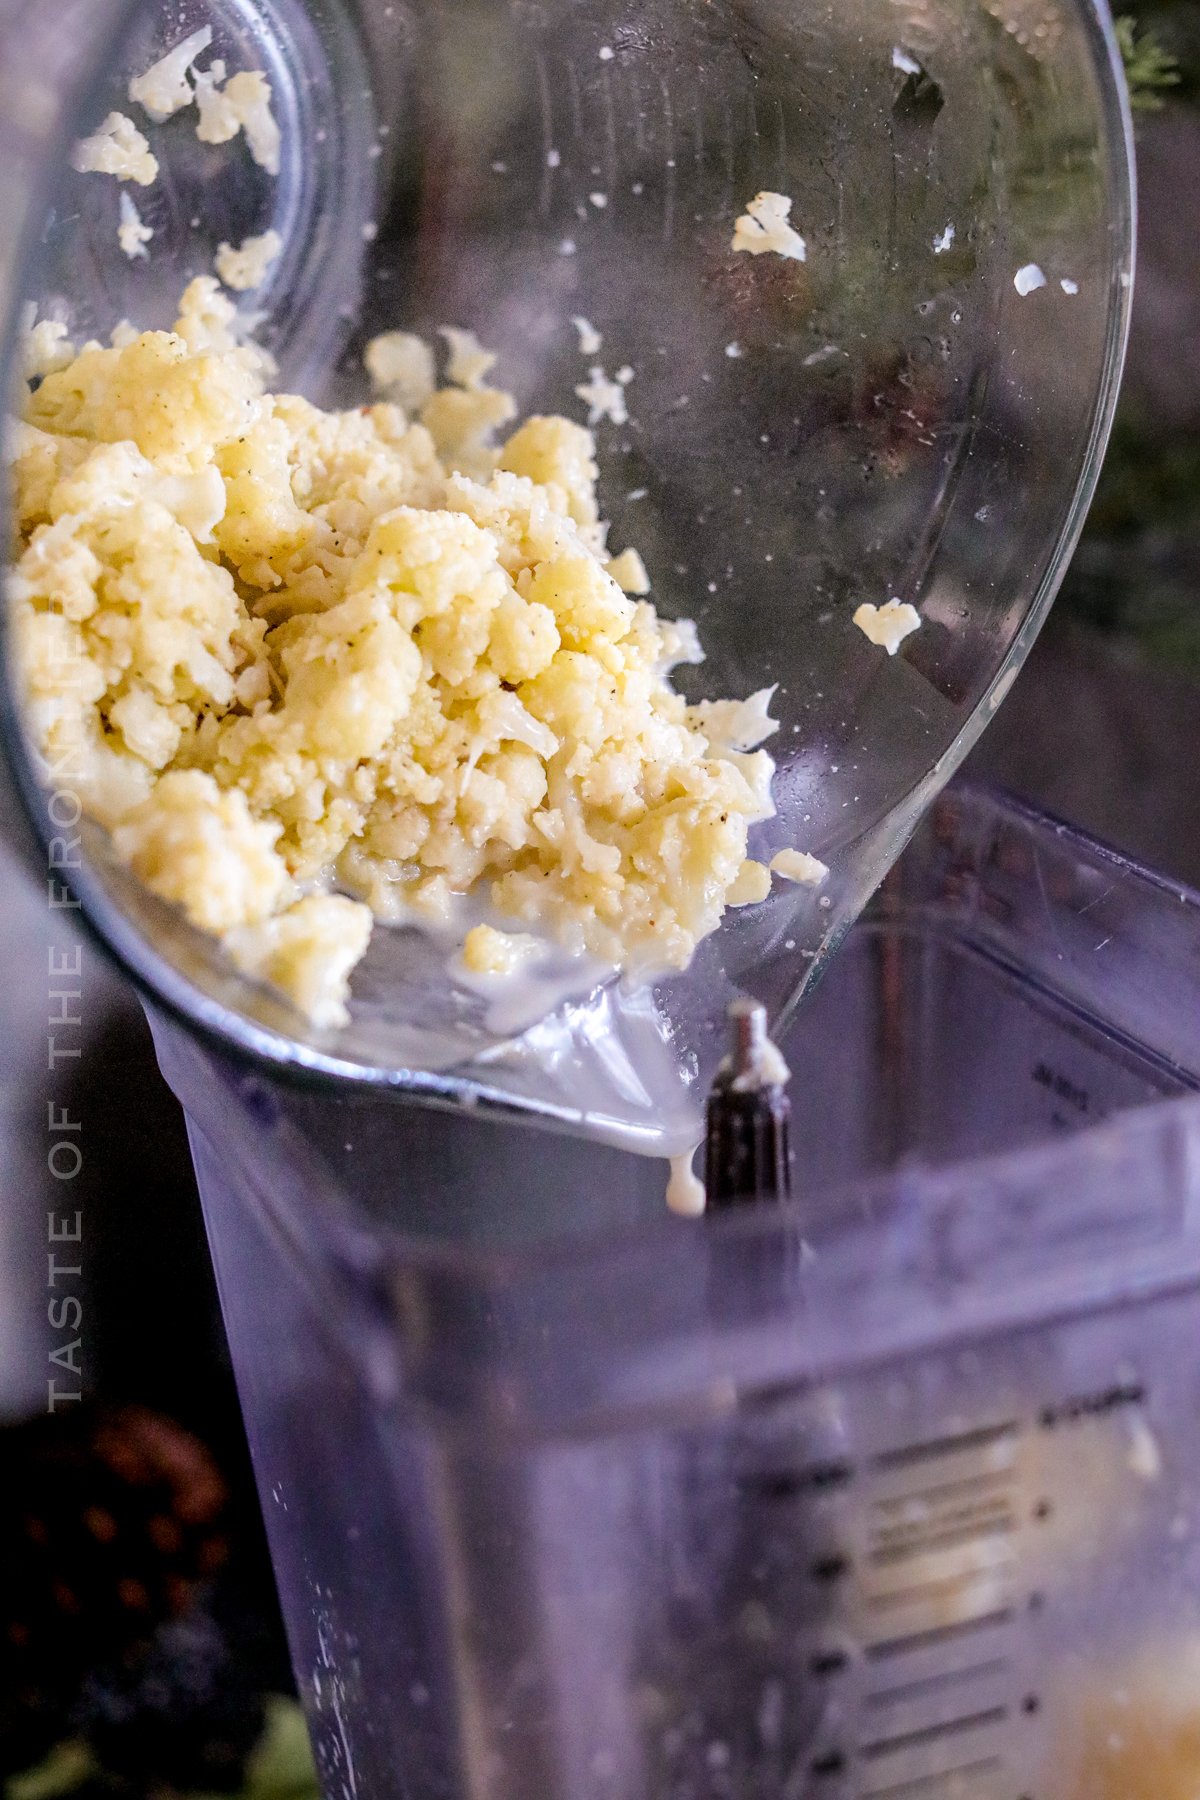 blending the cauliflower